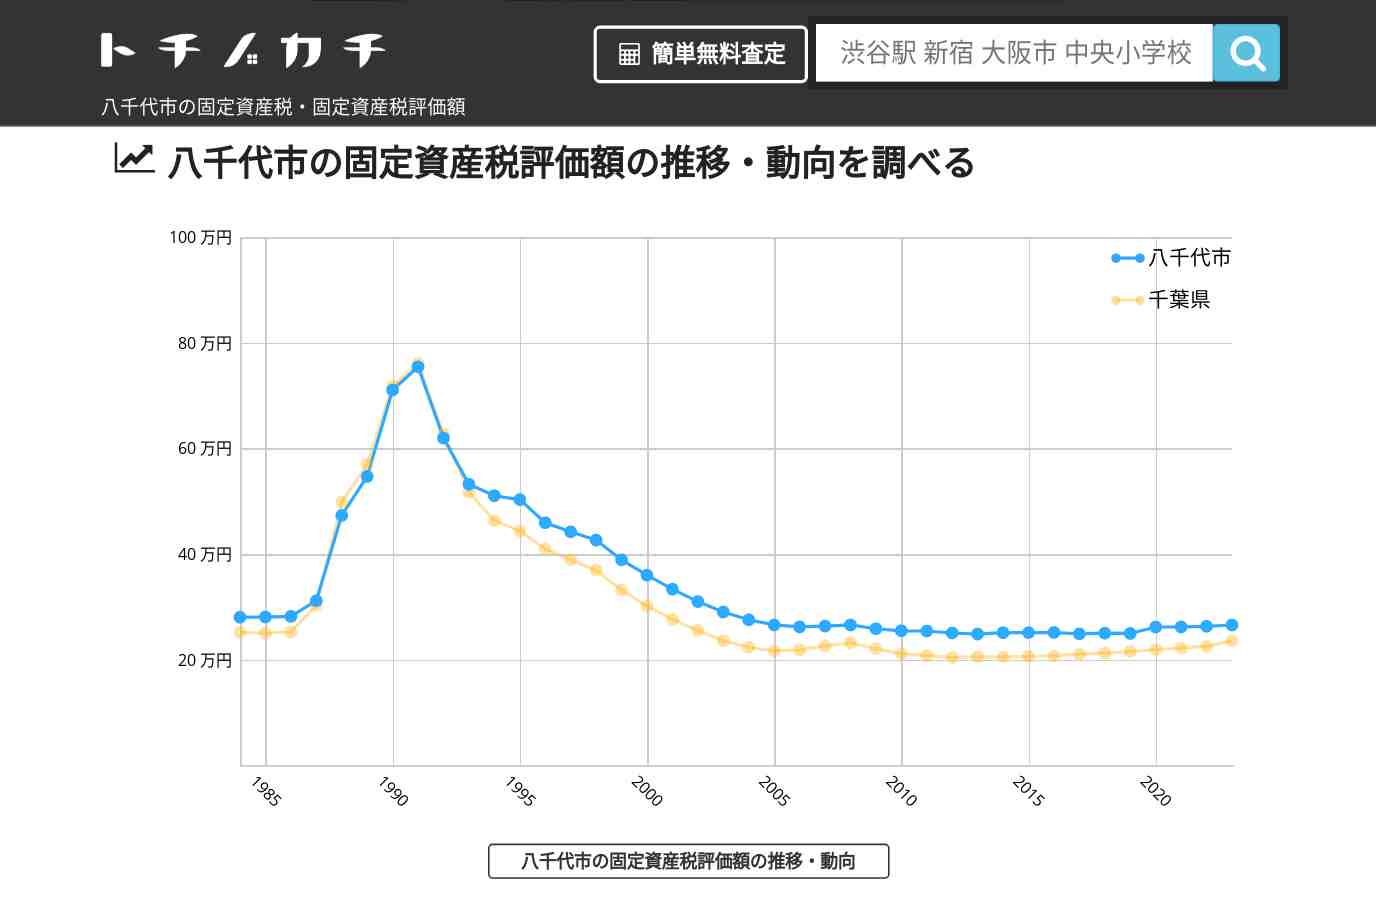 阿蘇中学校(千葉県 八千代市)周辺の固定資産税・固定資産税評価額 | トチノカチ